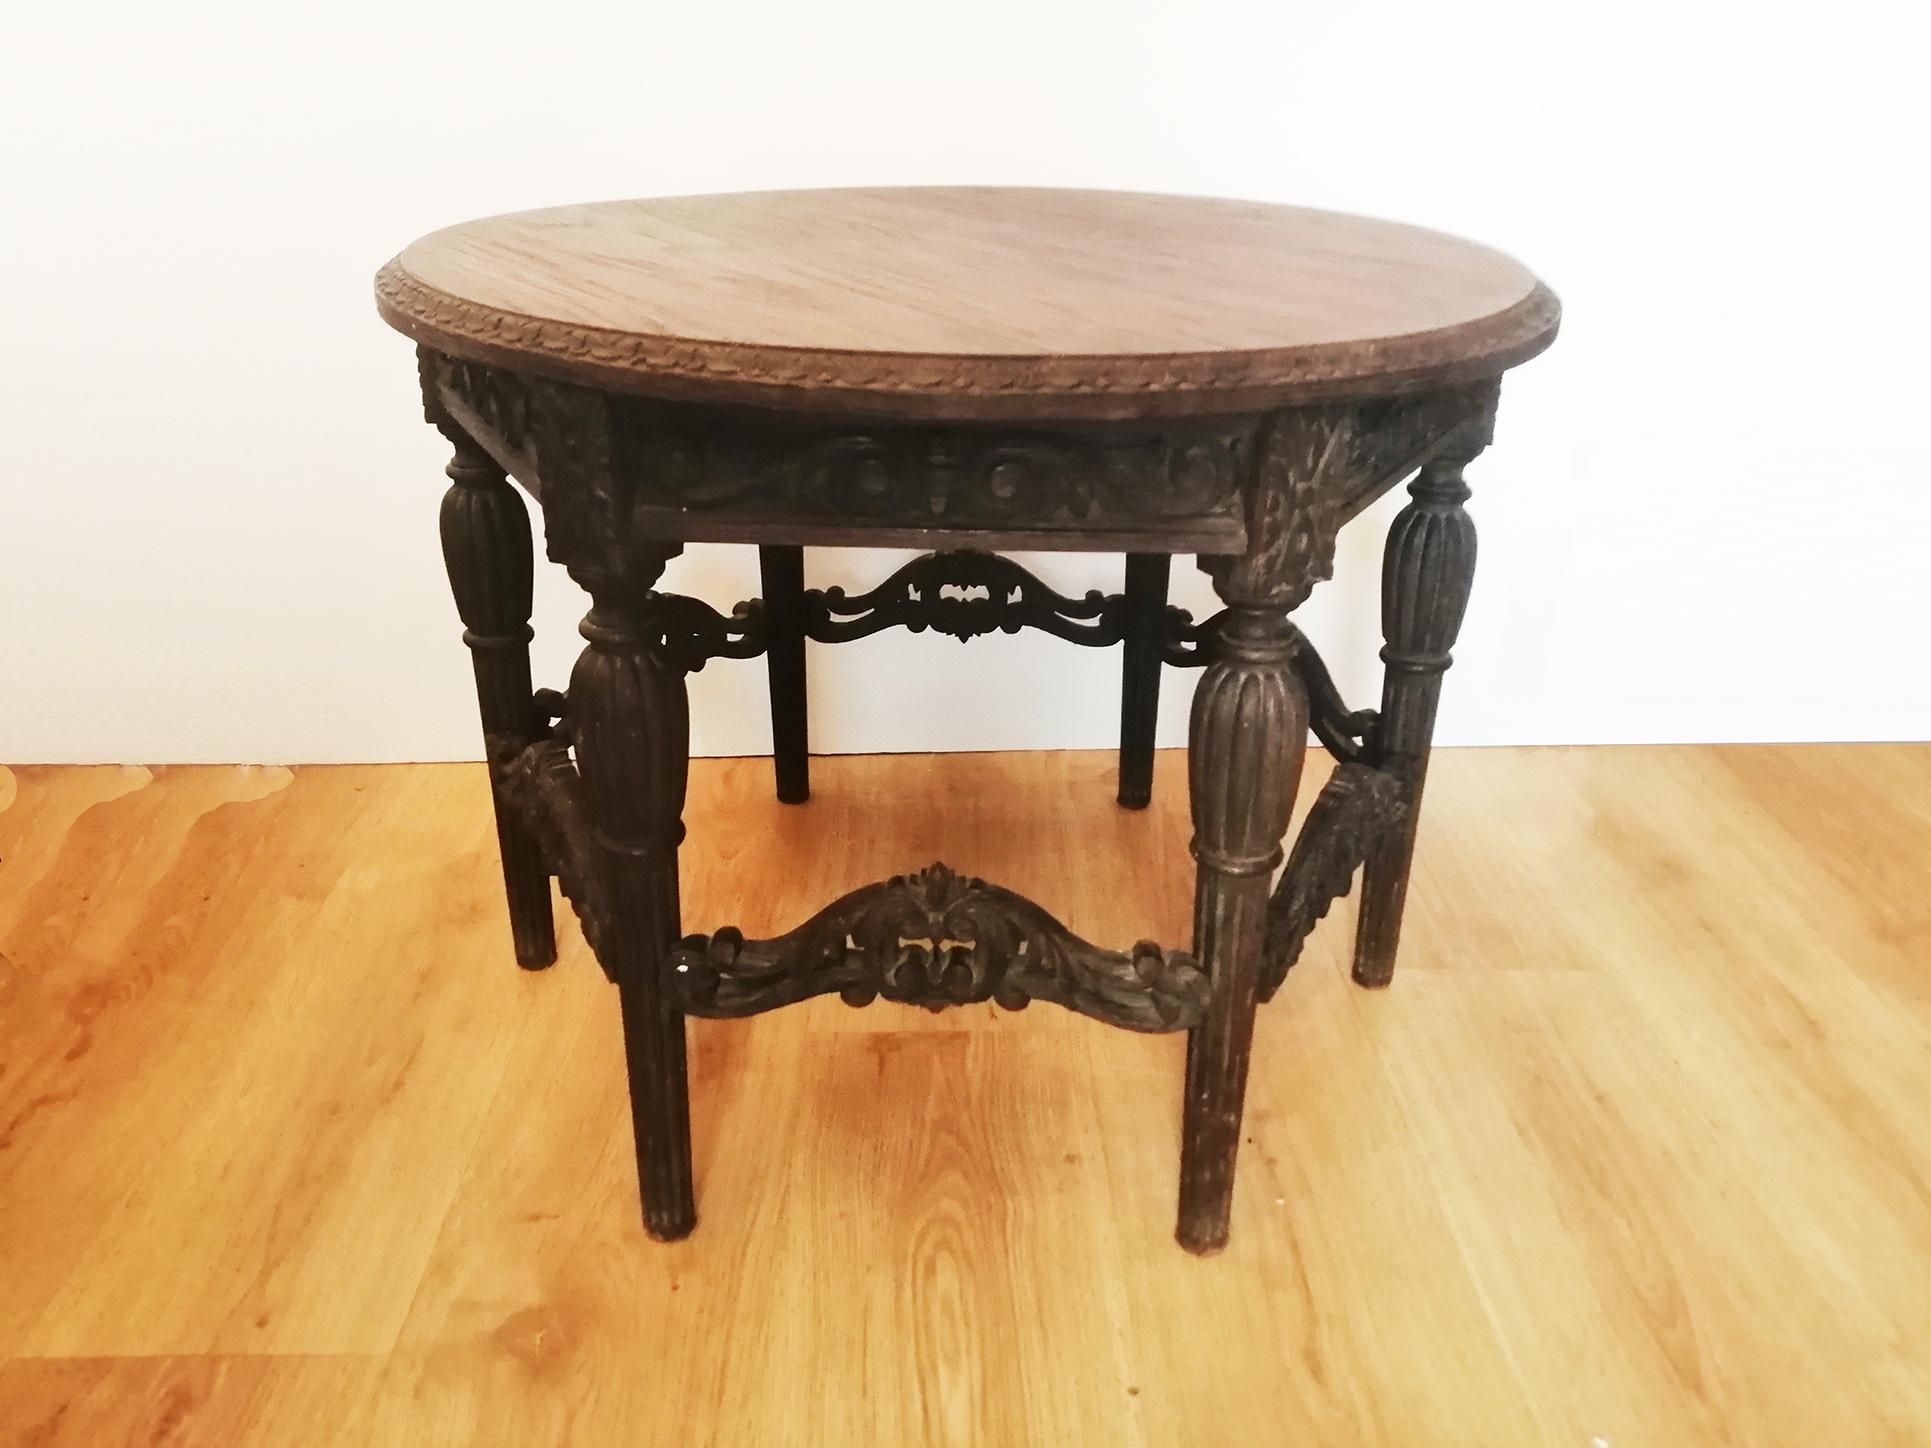 Wood Antique Round Table Renaissance Revival 19th Century For Sale